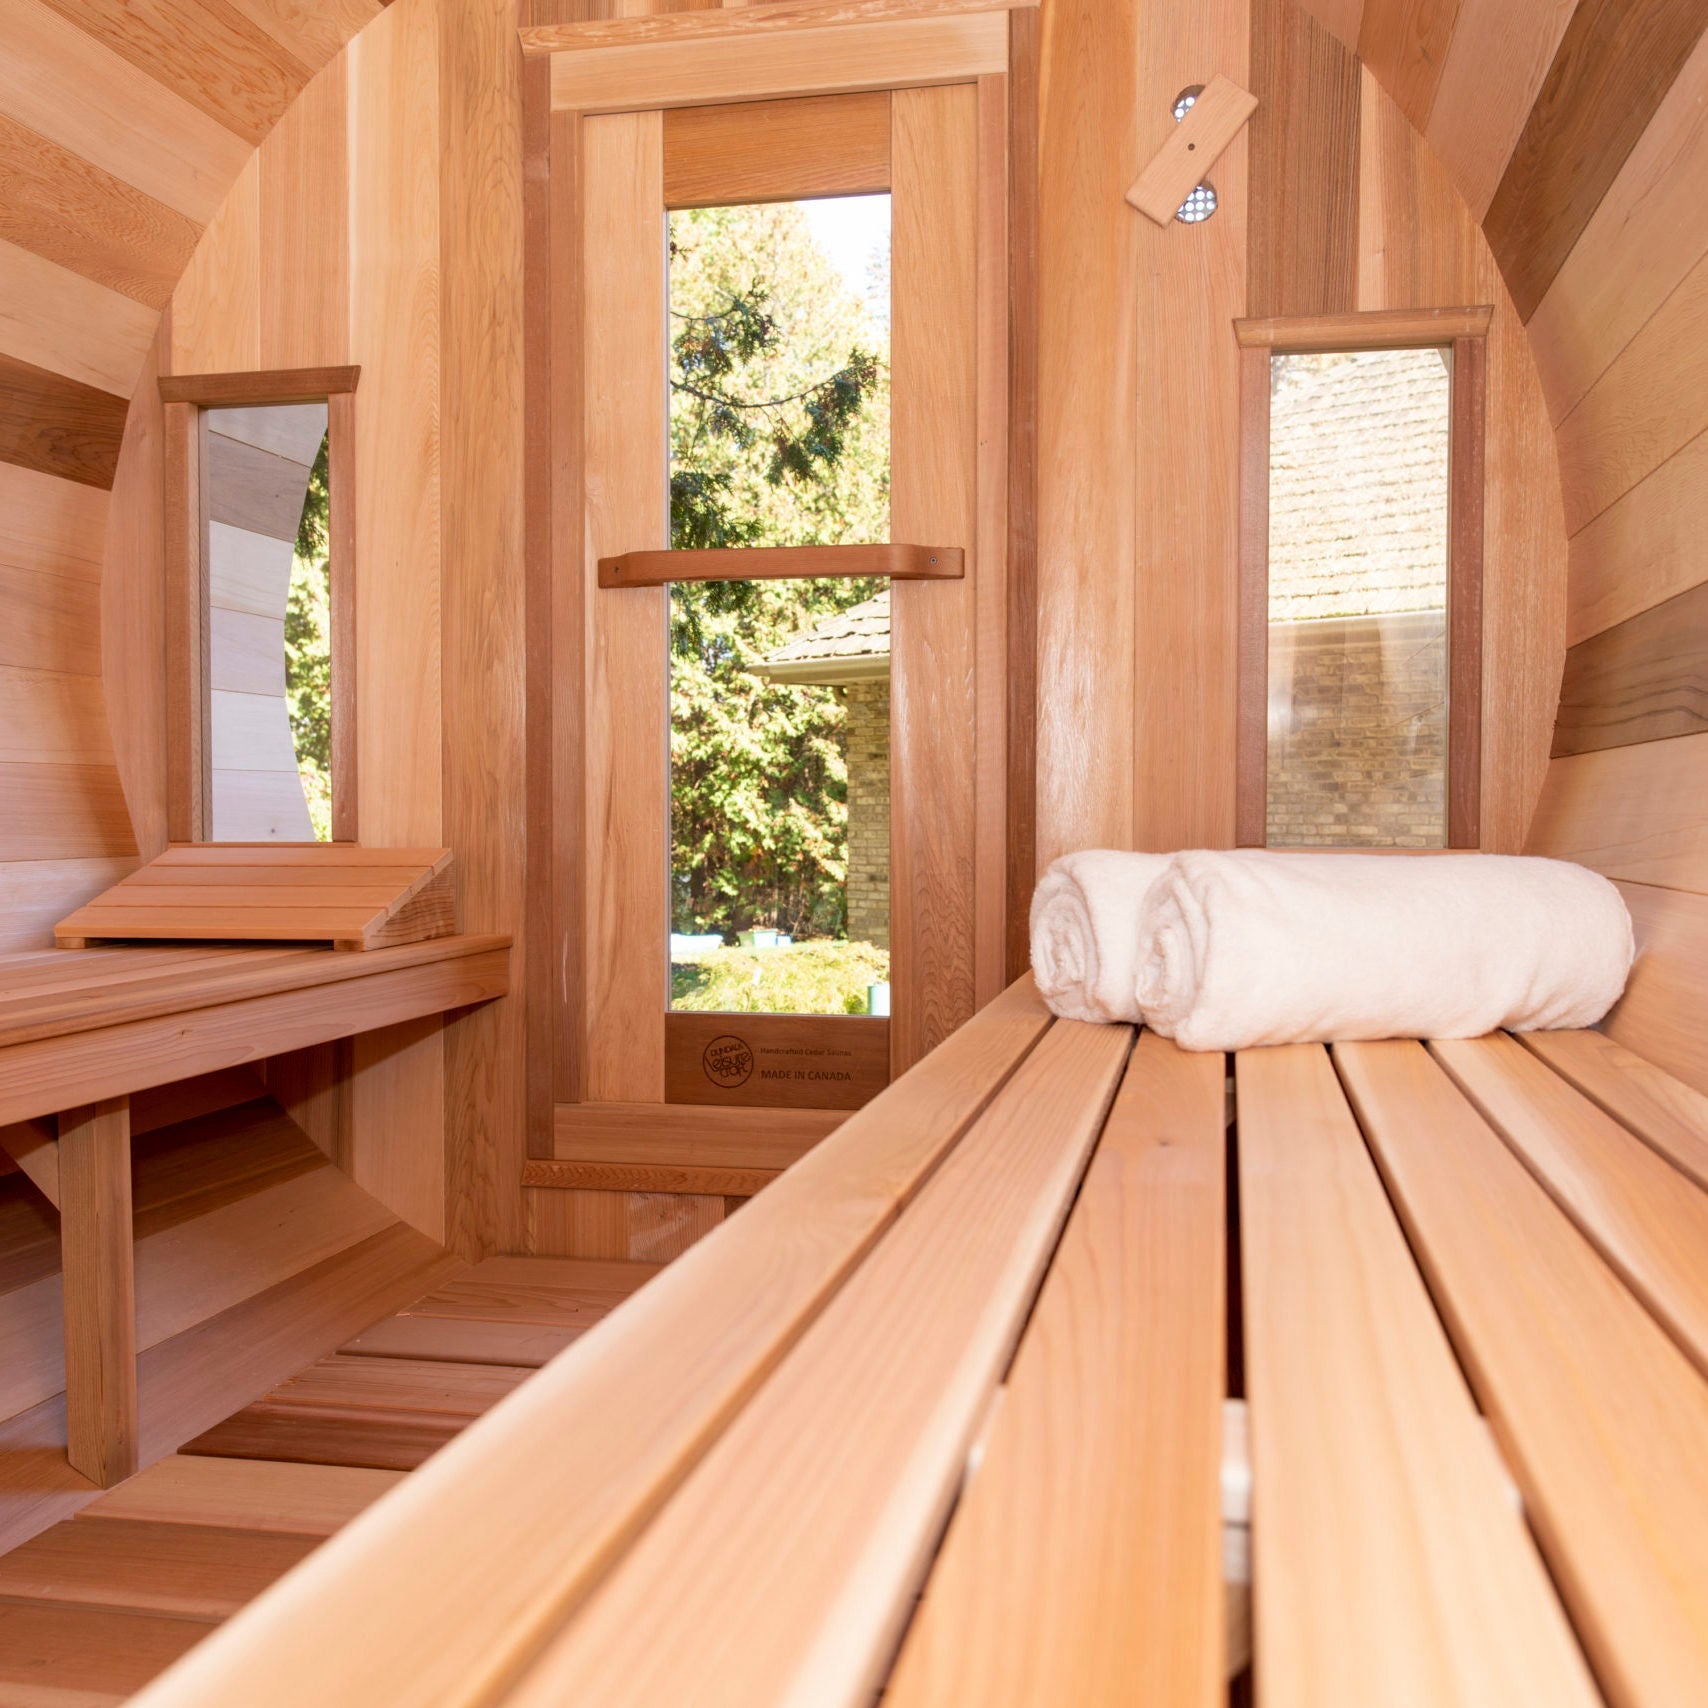 A Dundalk Leisurecraft Cedar Barrel Sauna made of Canadian Timber, providing a tranquil sauna experience.